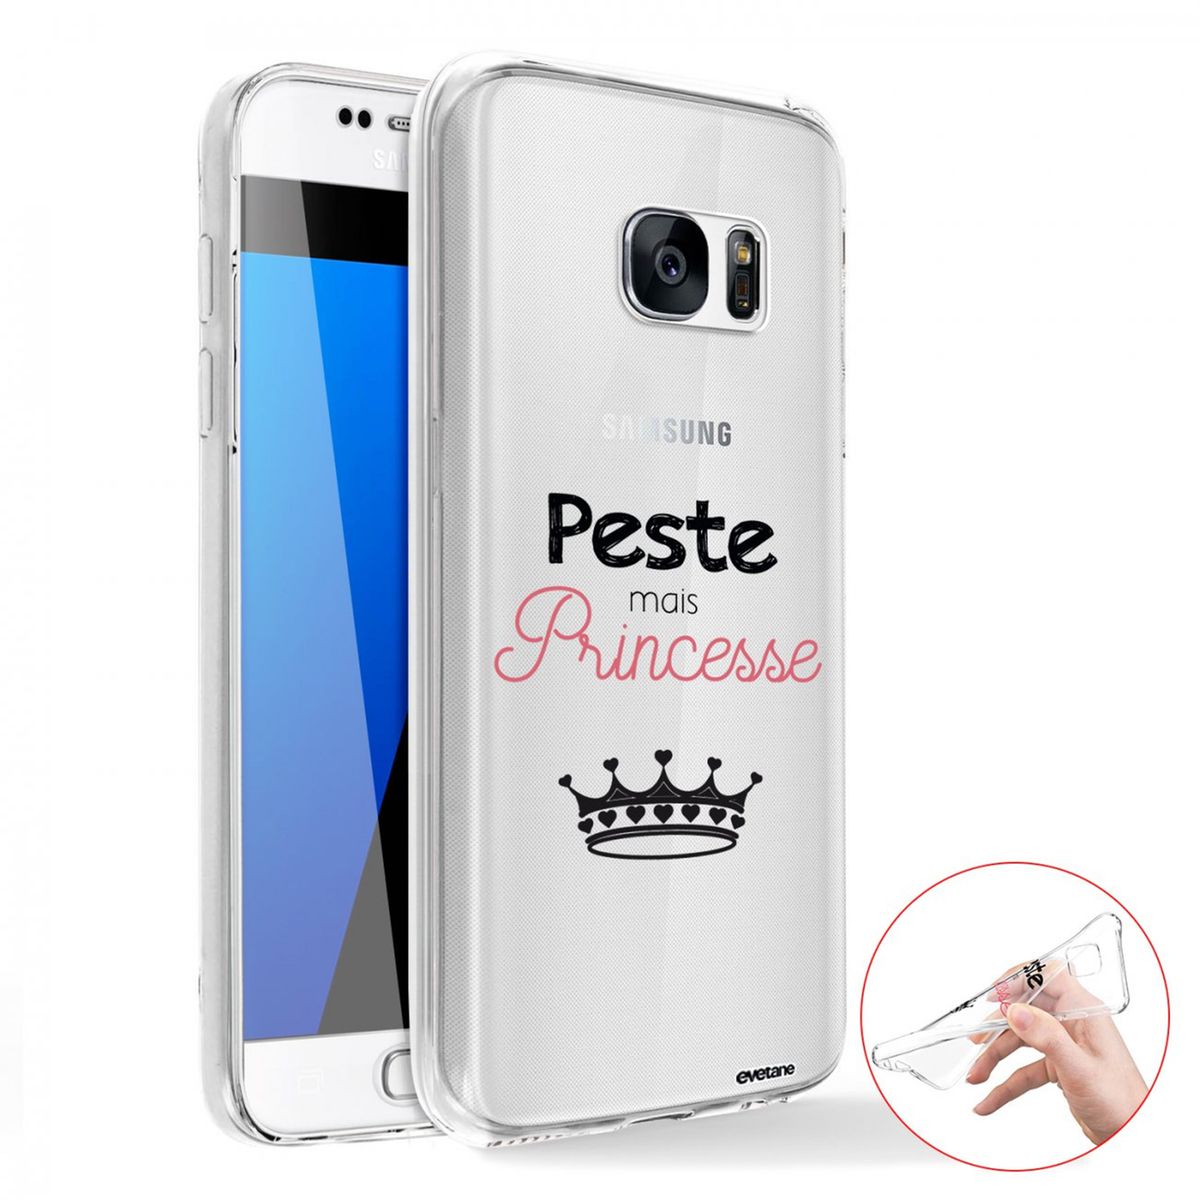 V-Ted Coque Samsung Galaxy S7 Attrape Reve Plume Silicone Ultra Fine Mince Bumper Housse Etui Cover Transparente avec Motif Dessin Antichoc 